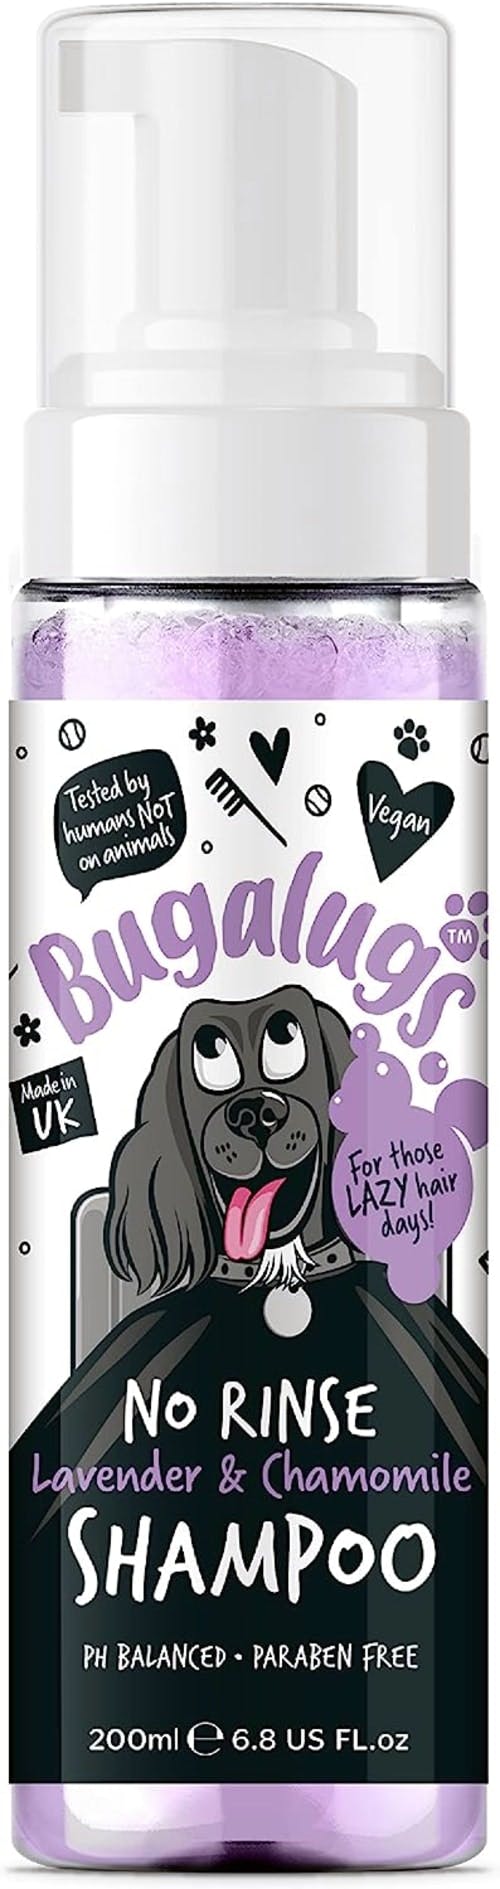 Bugalugs No Rinse Waterless Dog Shampoo review